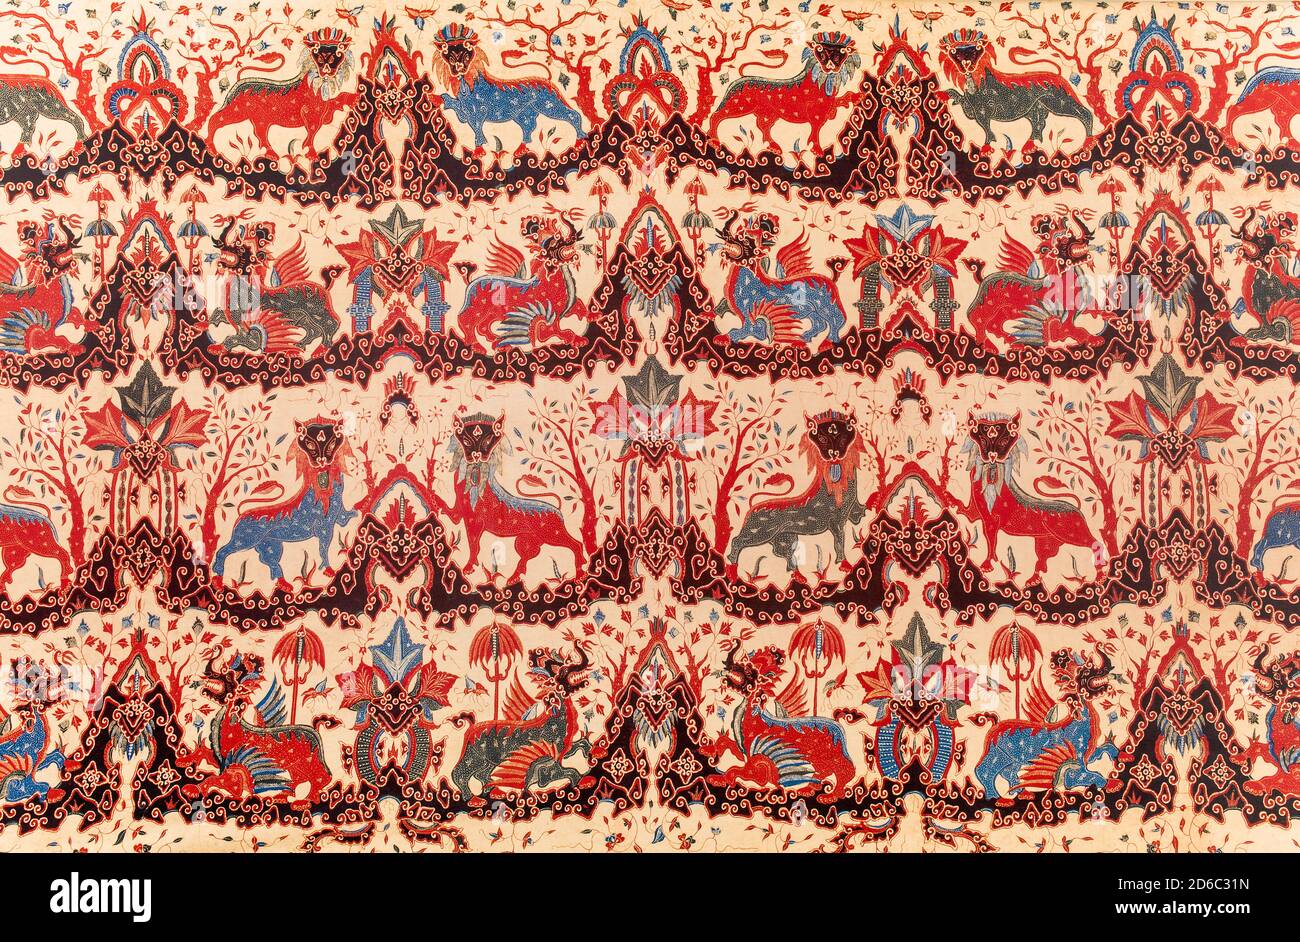 Indonesian Traditional Batik — Fabric Design, by Heri Supriyanto